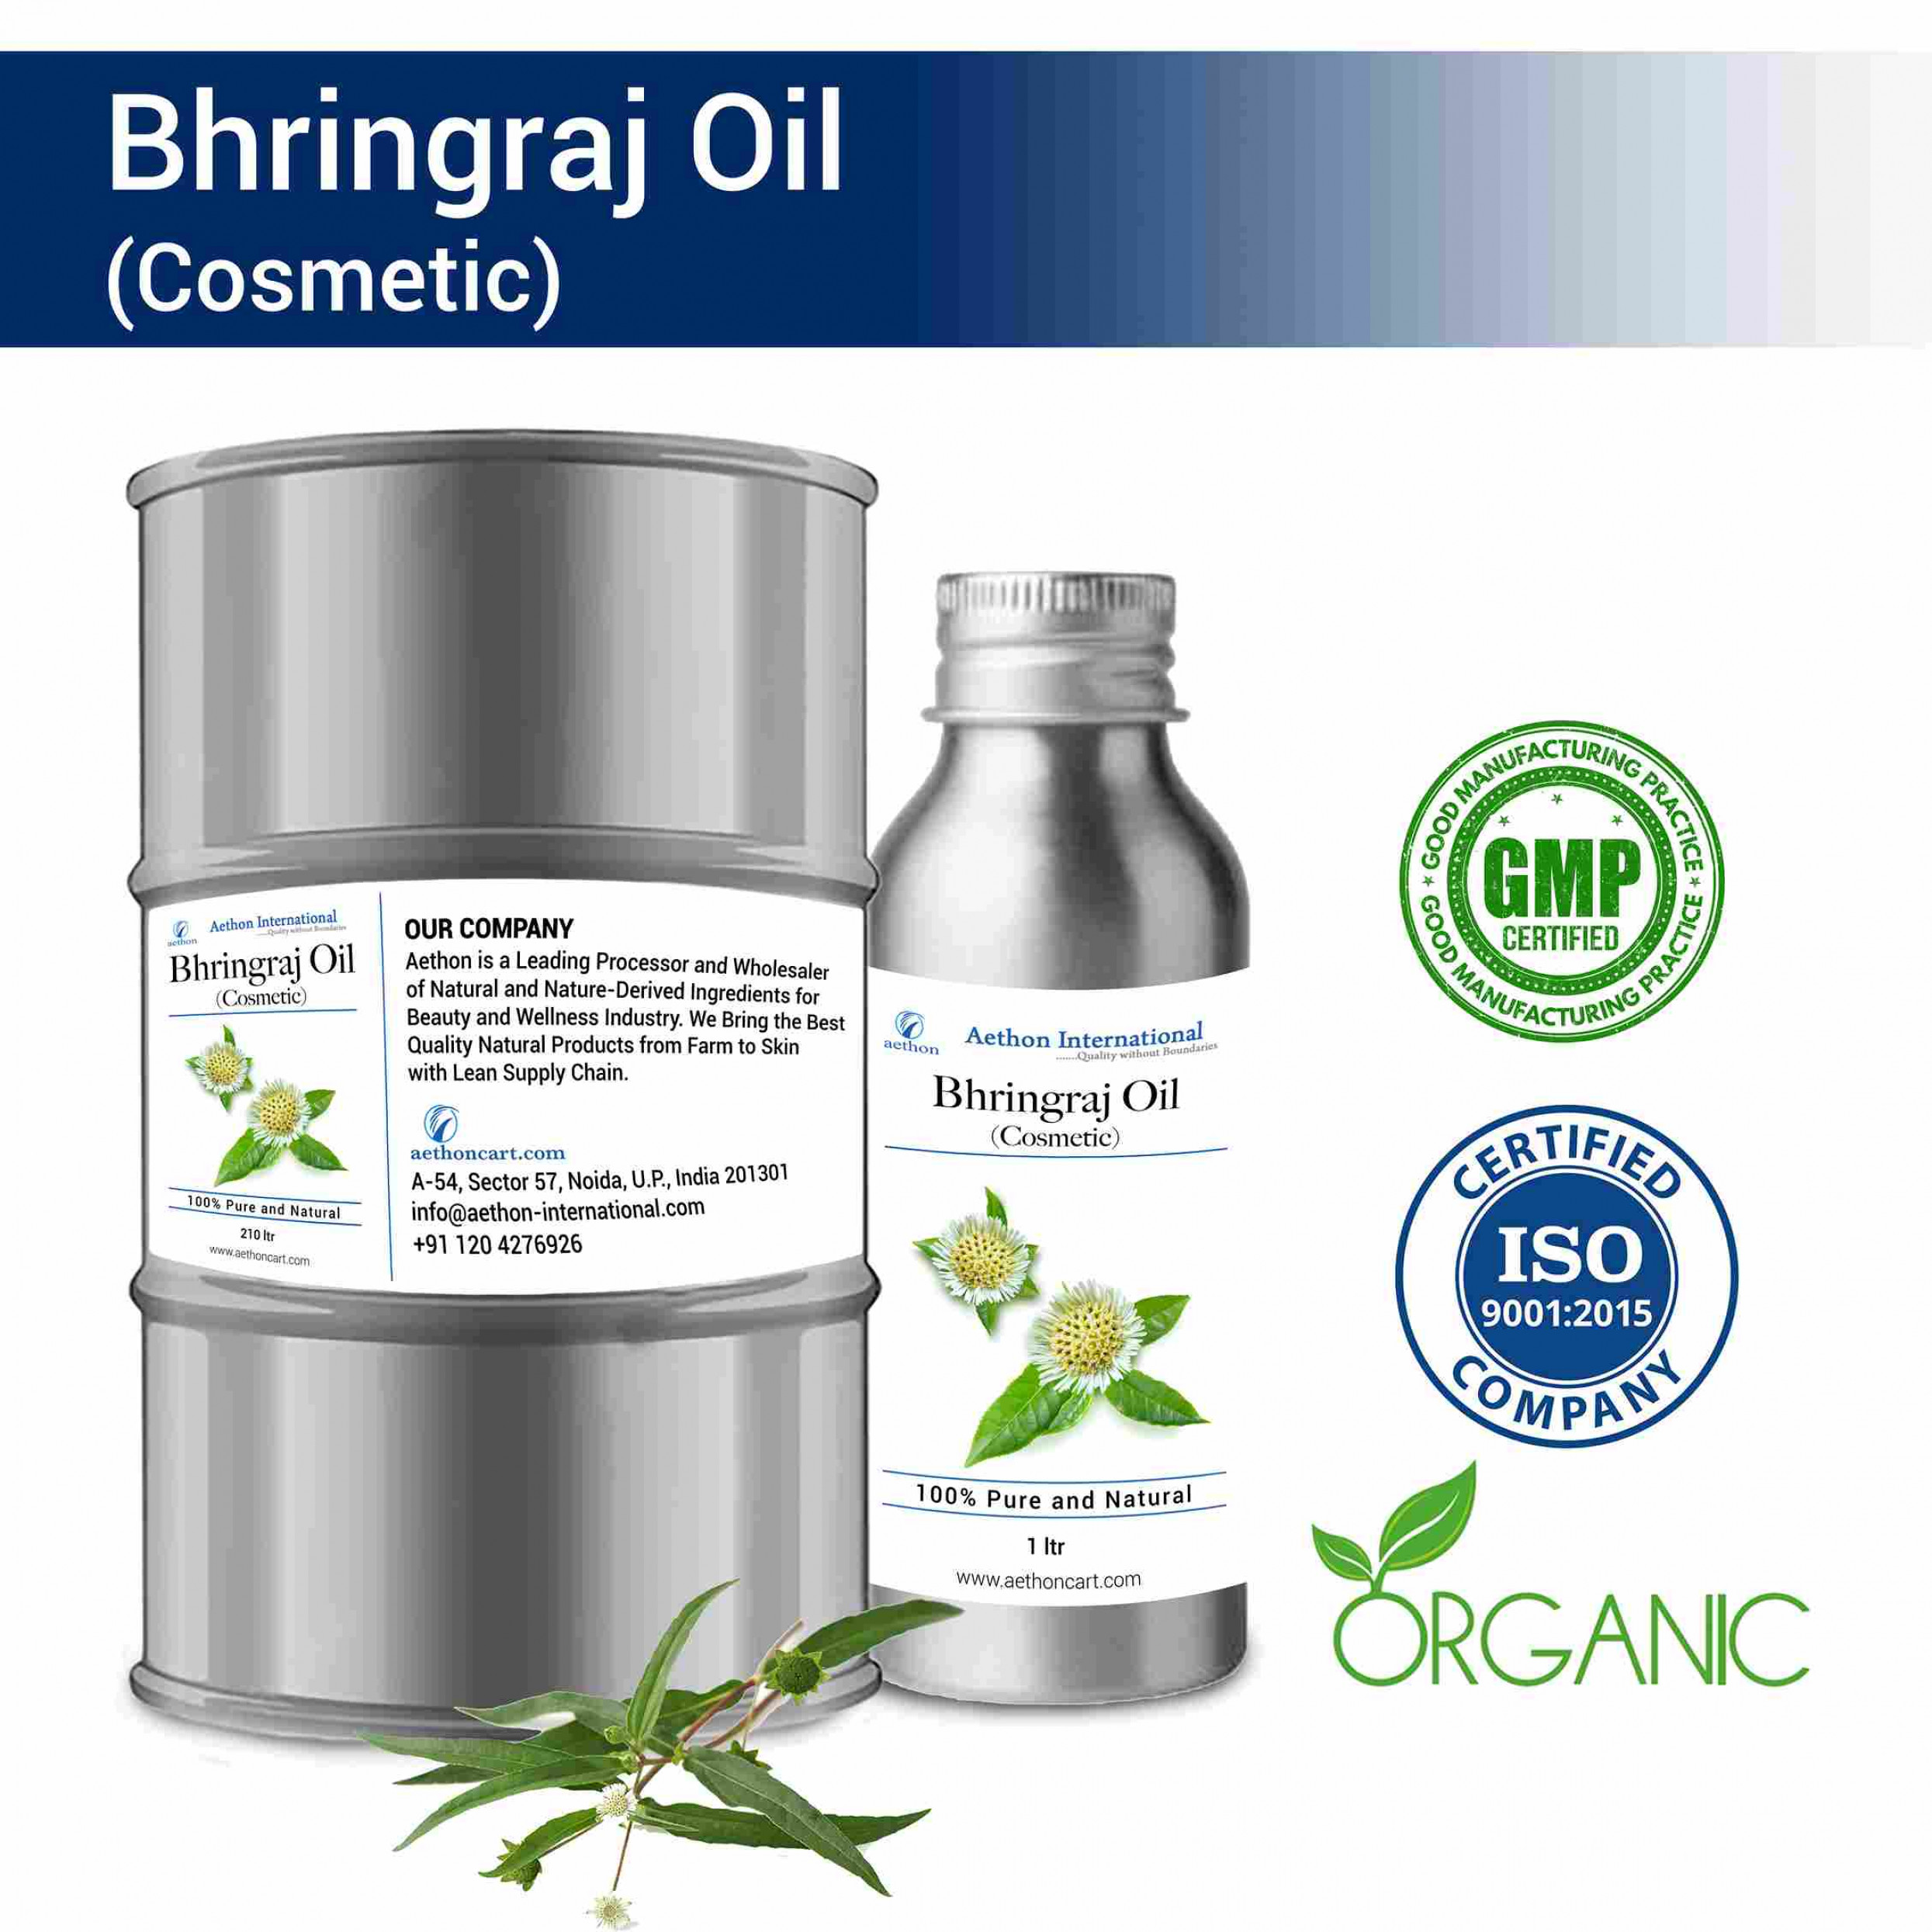 Bhringraj Oil (Cosmetic)